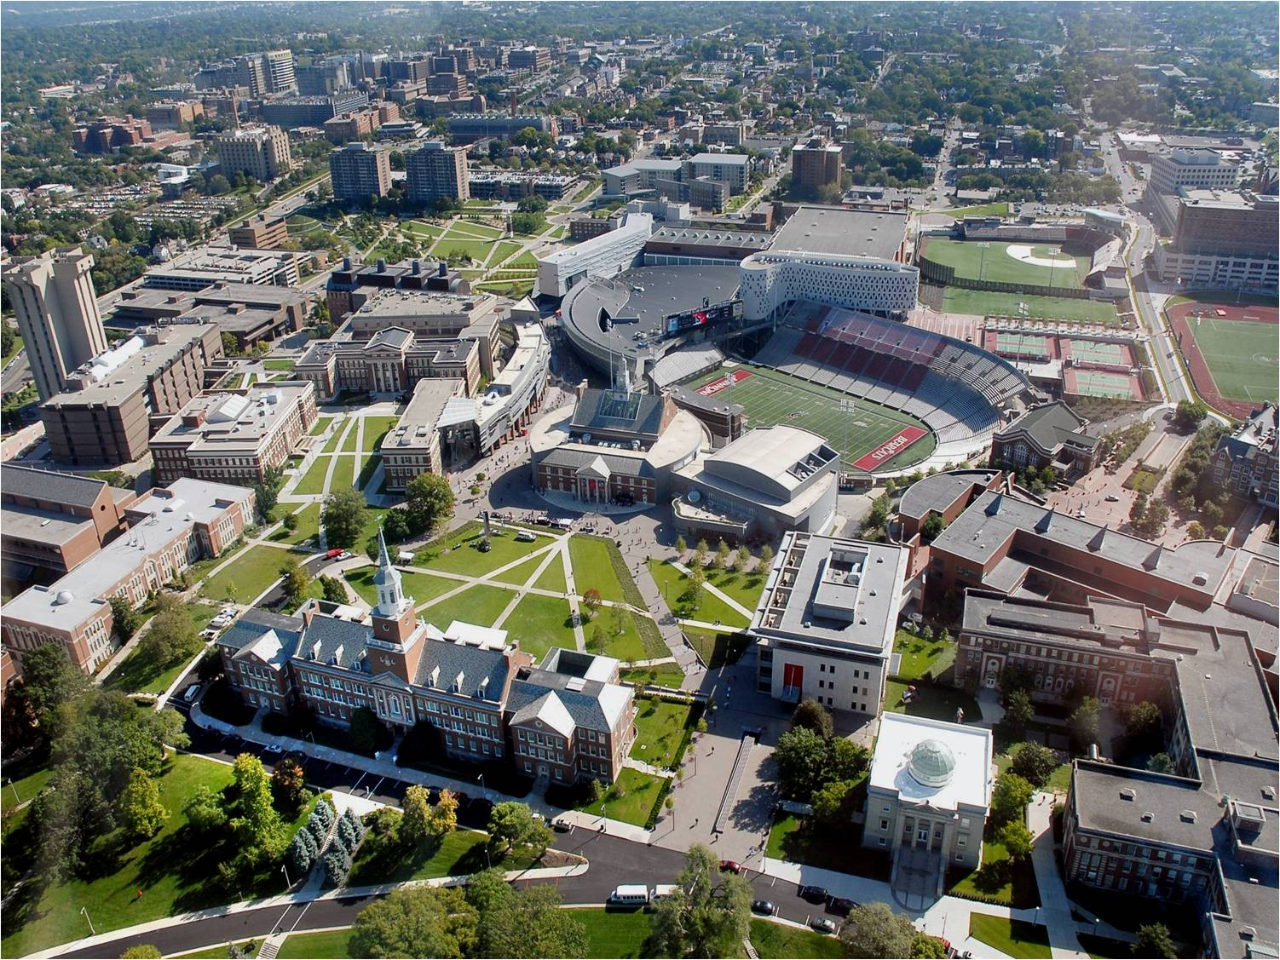 The University of Cincinnati's Uptown Campus